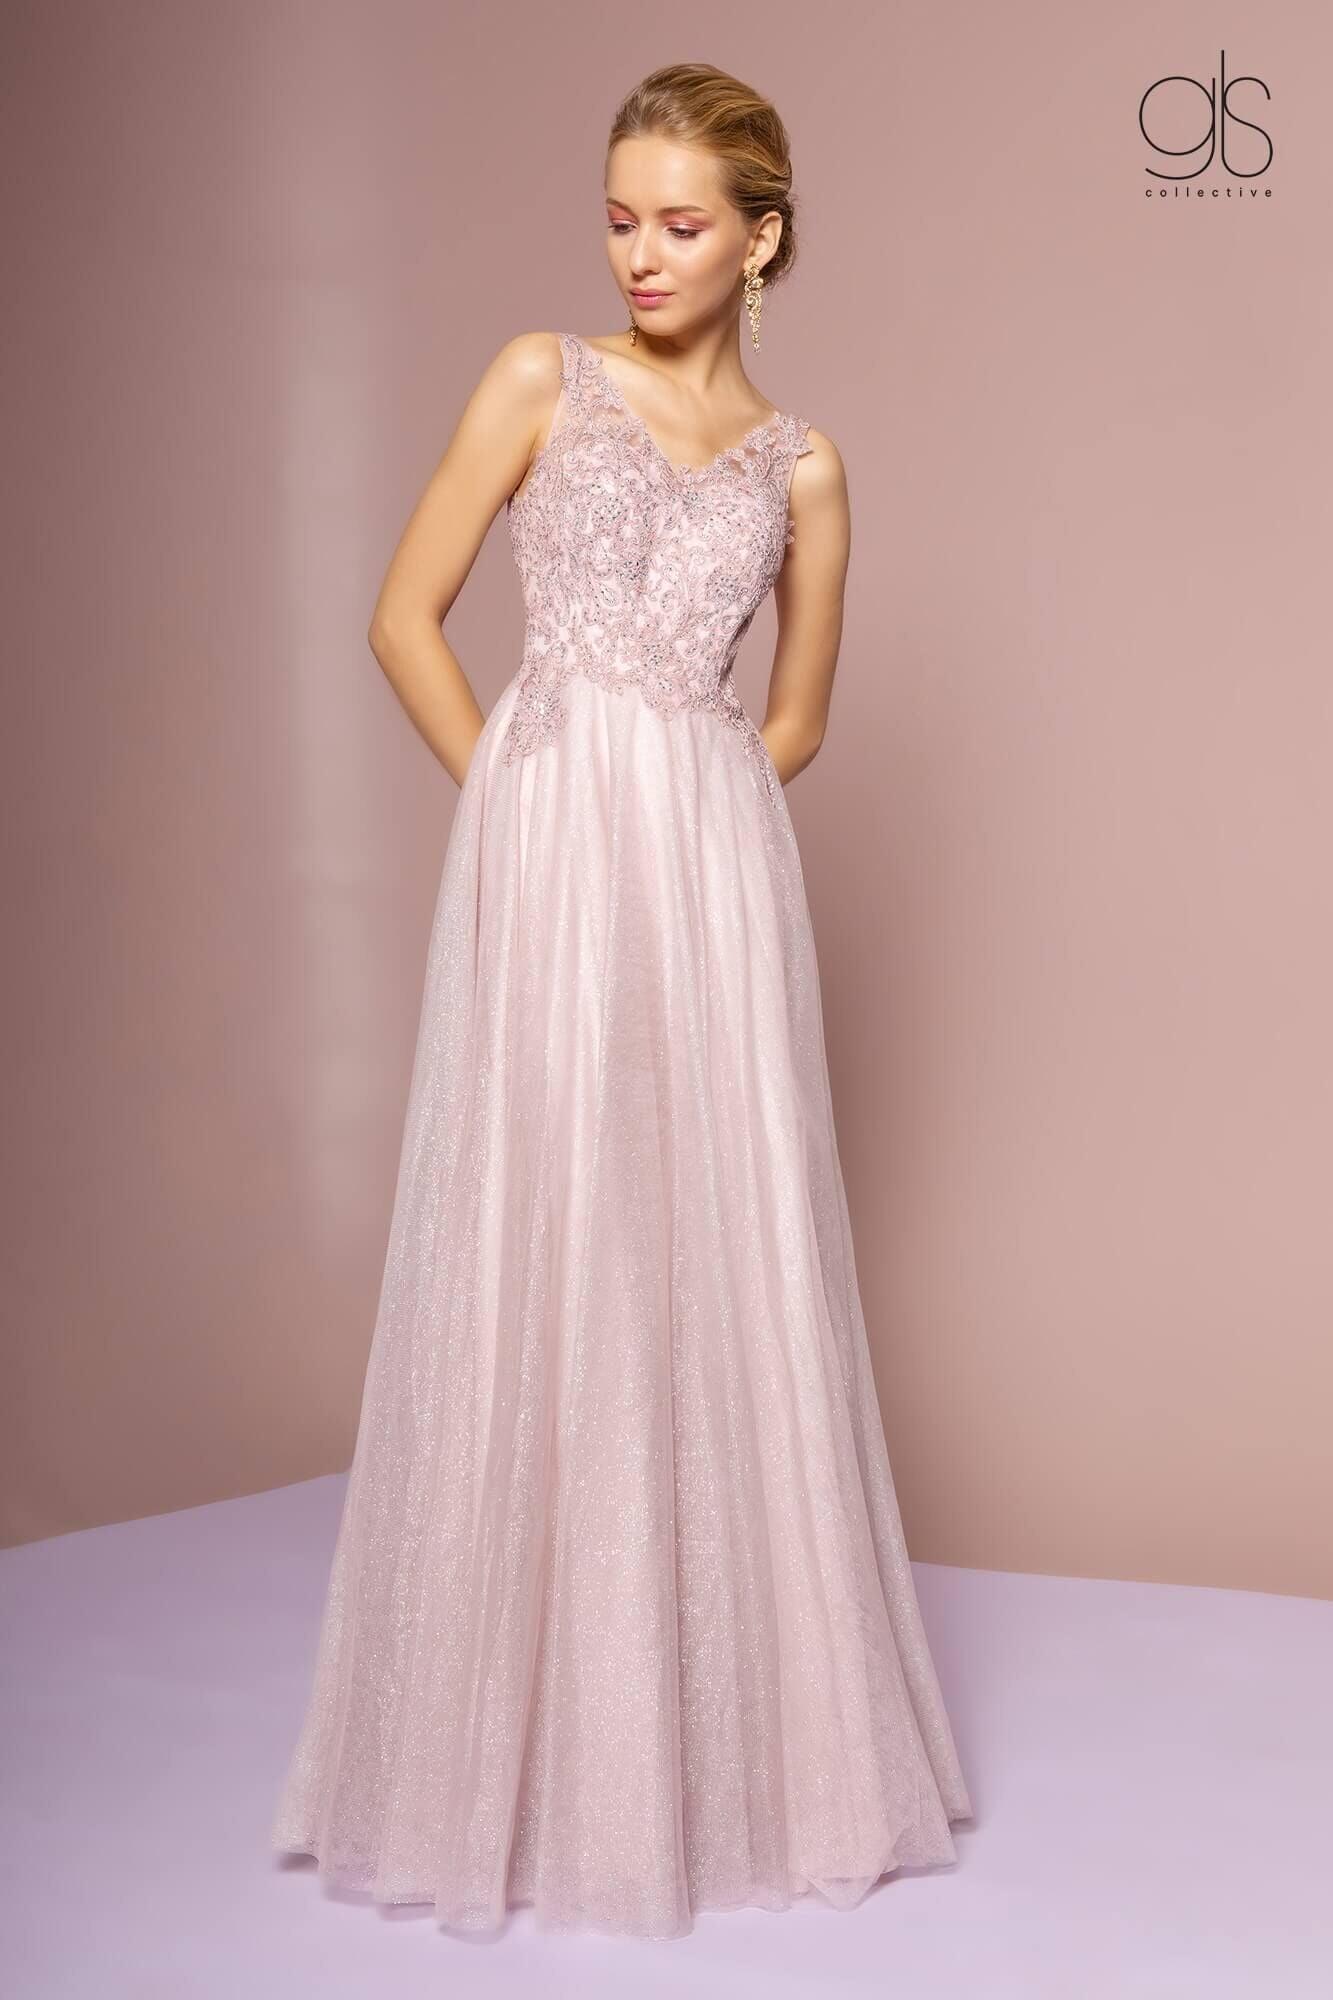 Prom Long Dress Sleeveless Formal Evening Gown - The Dress Outlet Elizabeth K